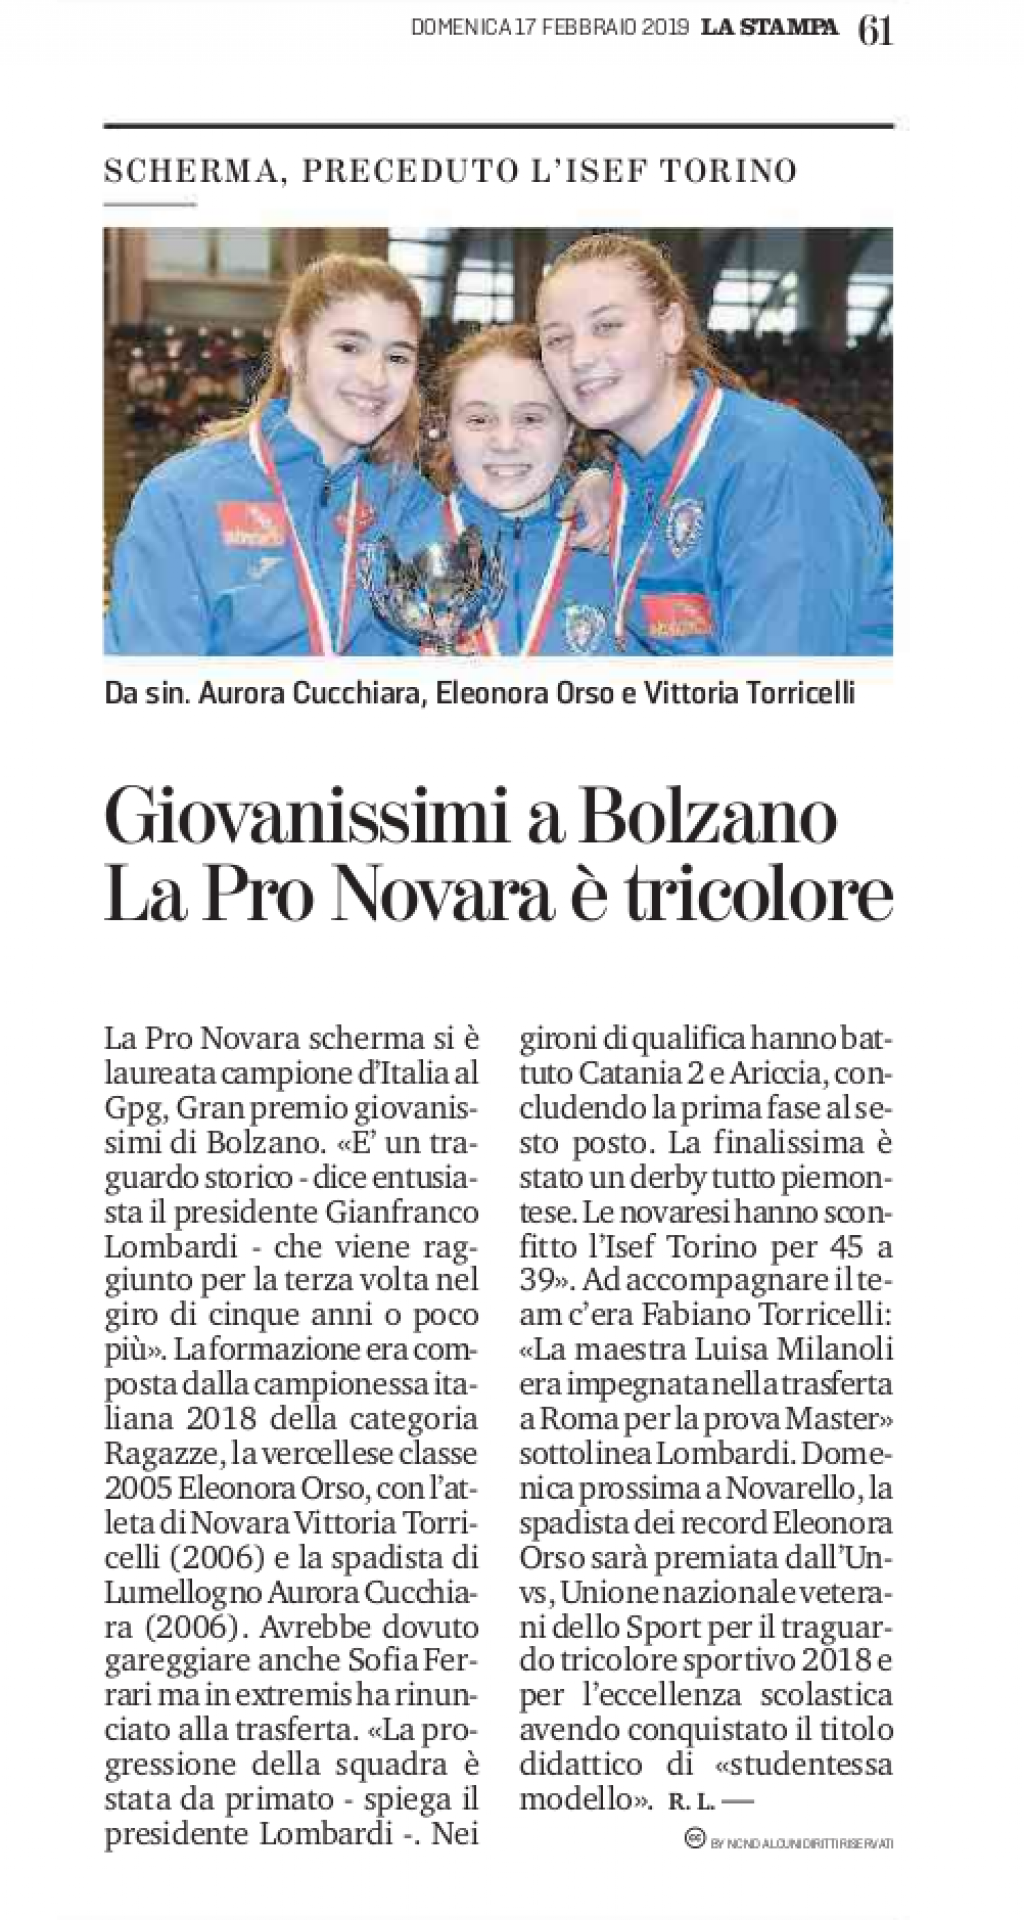 Campioni d'Italia Under 14 a Squadre  - Pronovara 